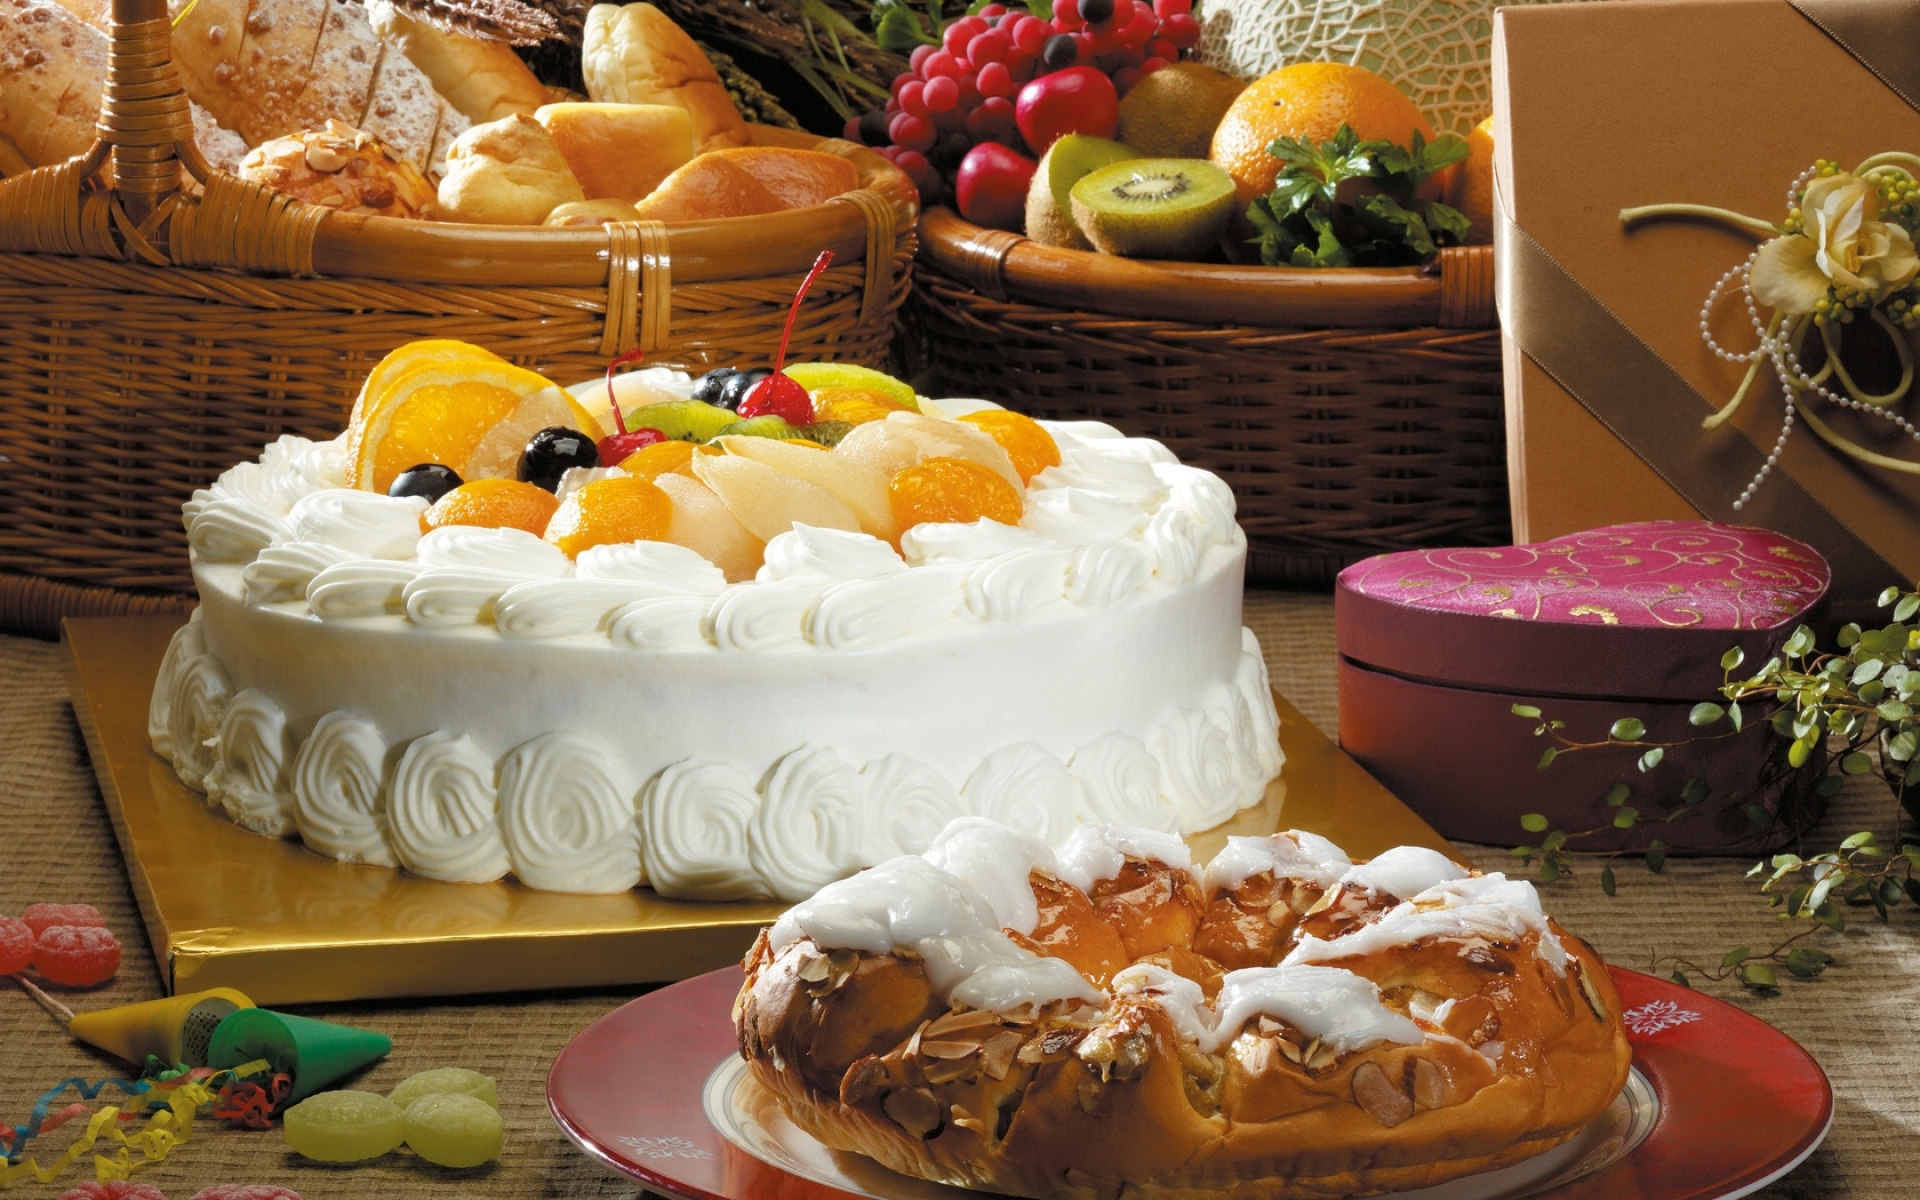 Картинки Стол, тарелка, коробка, корзина, десерт, сладкий, торт, пирог, фрукты, сливки, апельсины, вишня, конфеты, киви, виноград, хлеб, белый хлеб, крупы фото и обои на рабочий стол